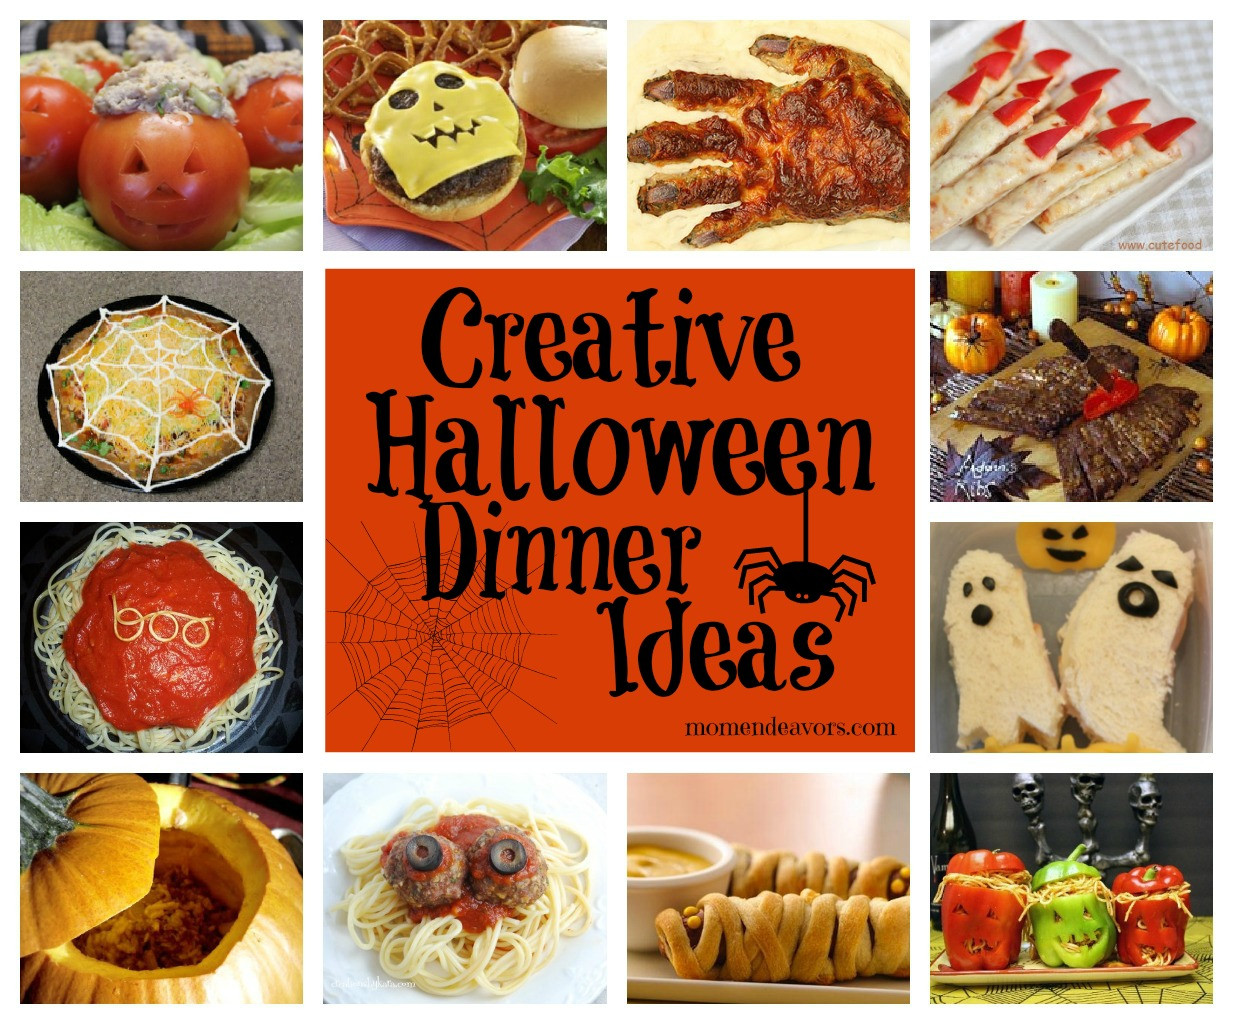 Halloween Dinner Ideas
 15 Creative Halloween Dinner Ideas